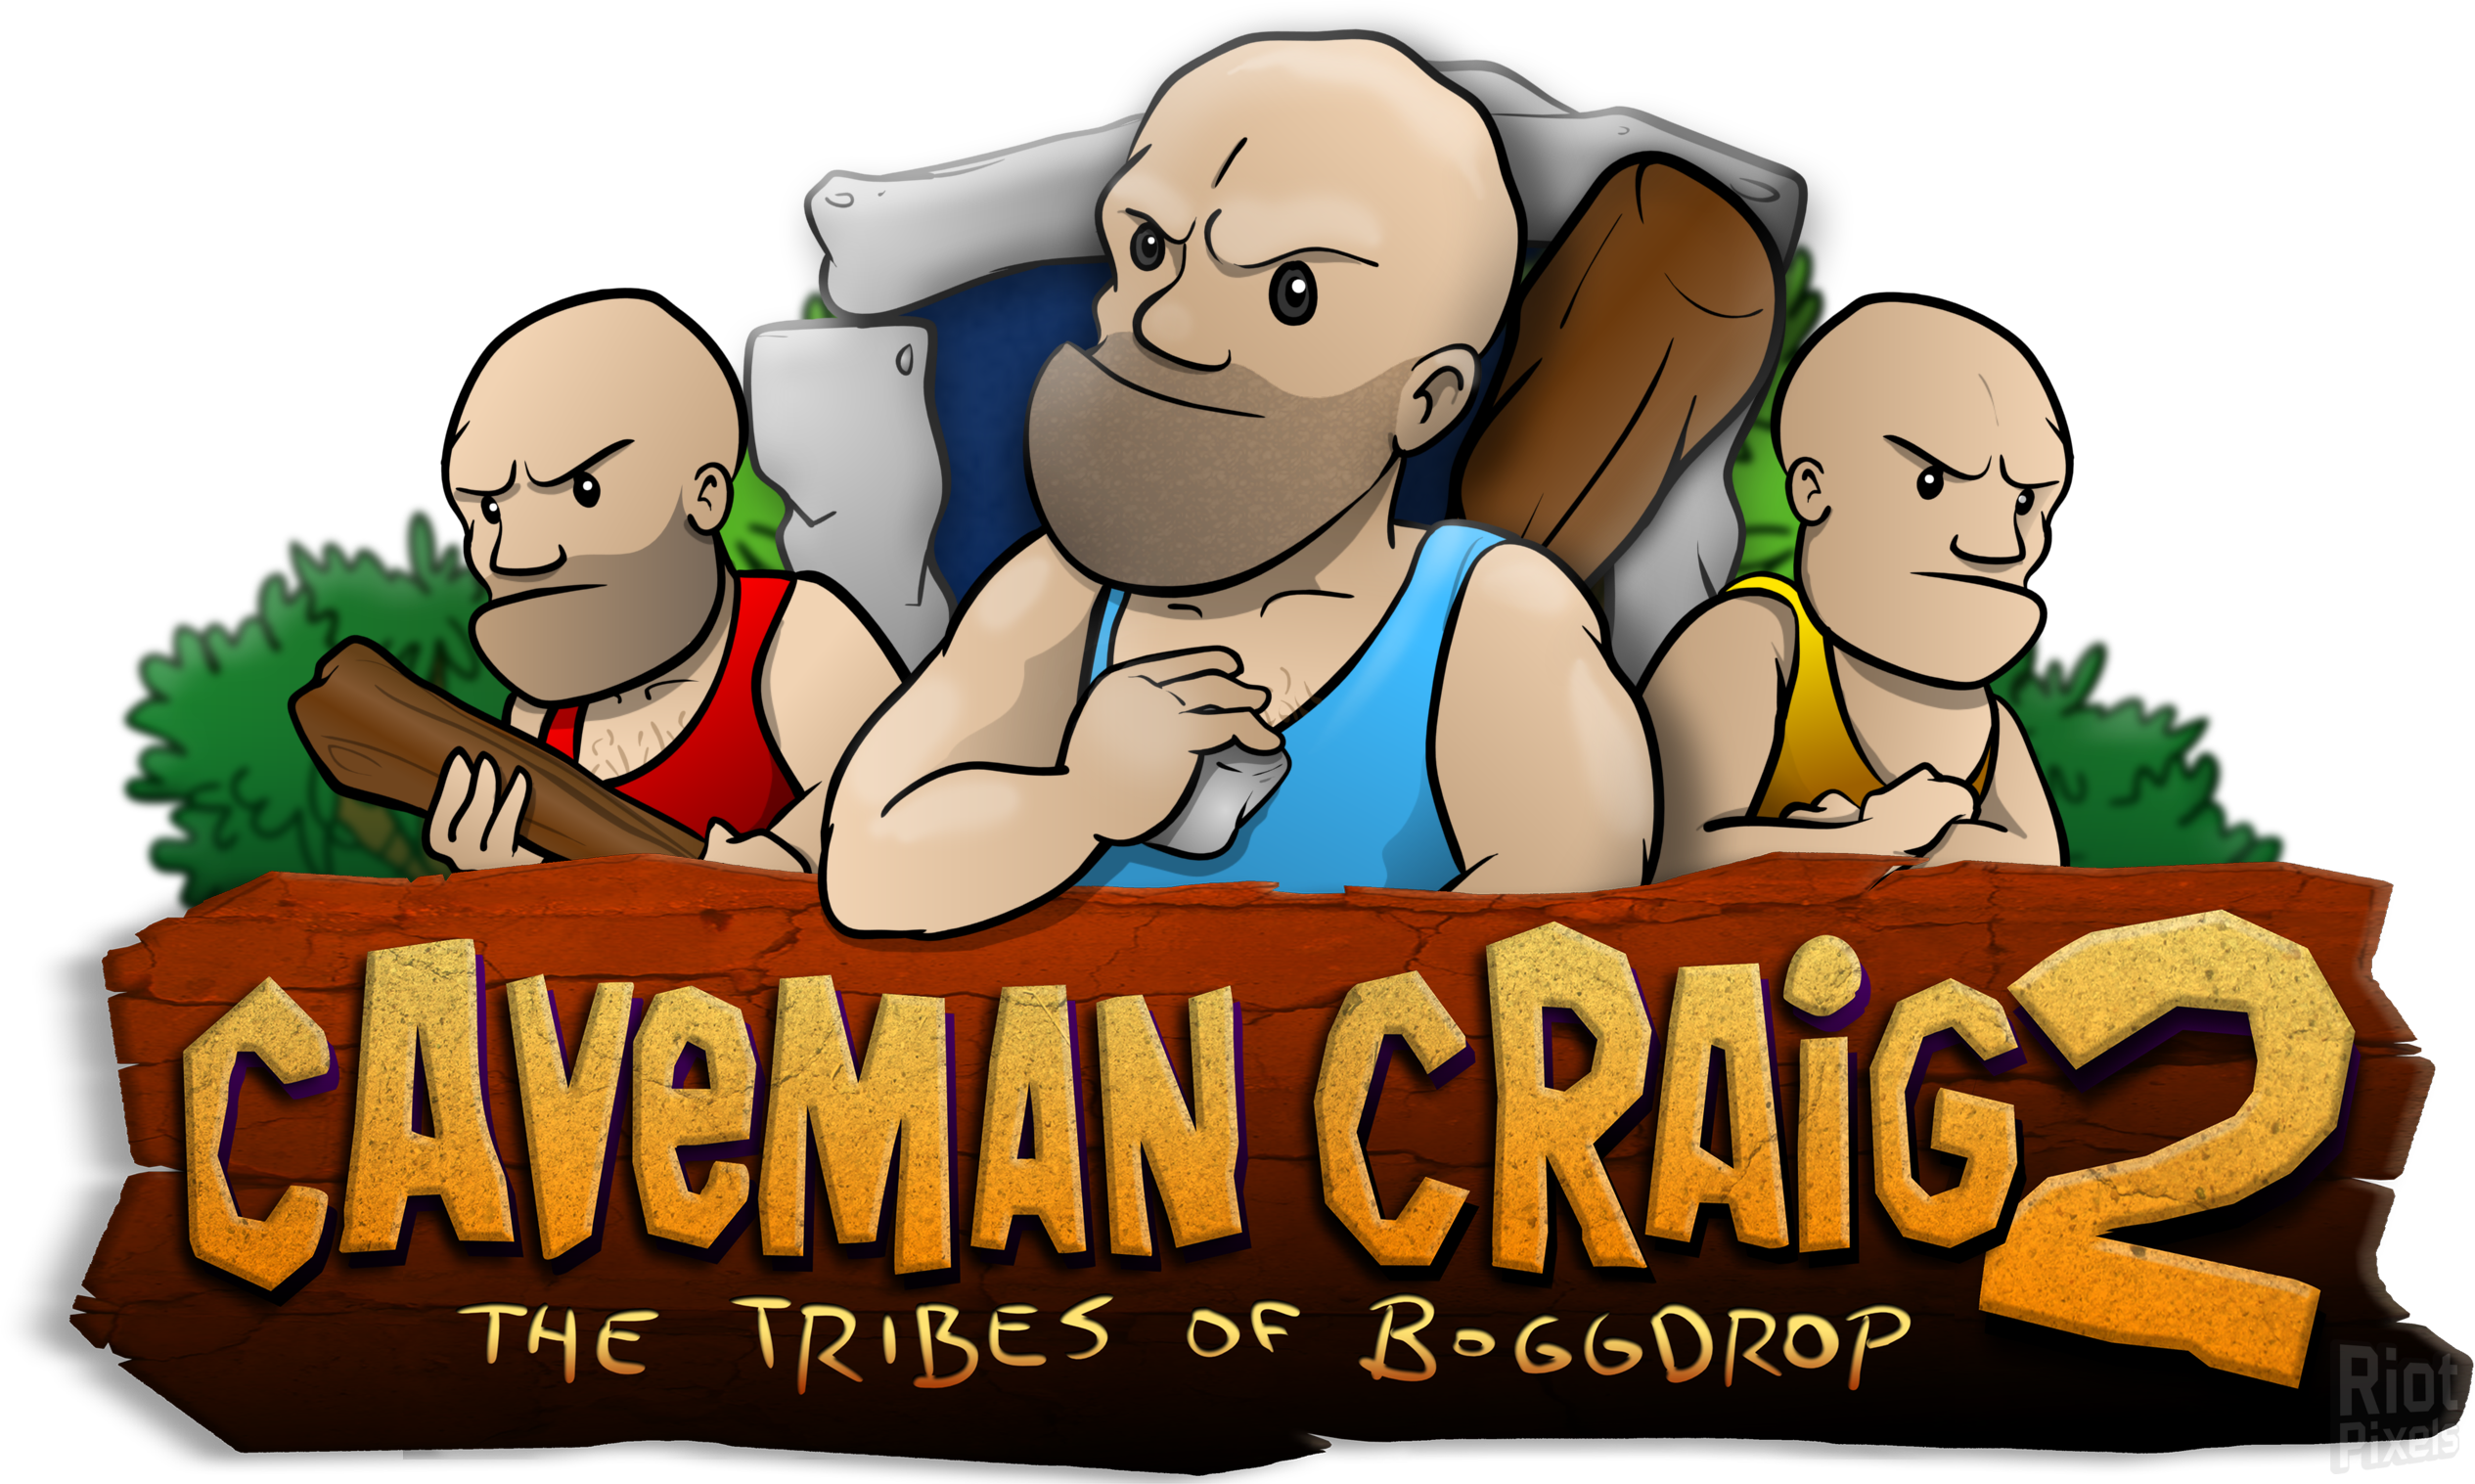 Caveman Craig 2: The Tribes of Boggdrop. 